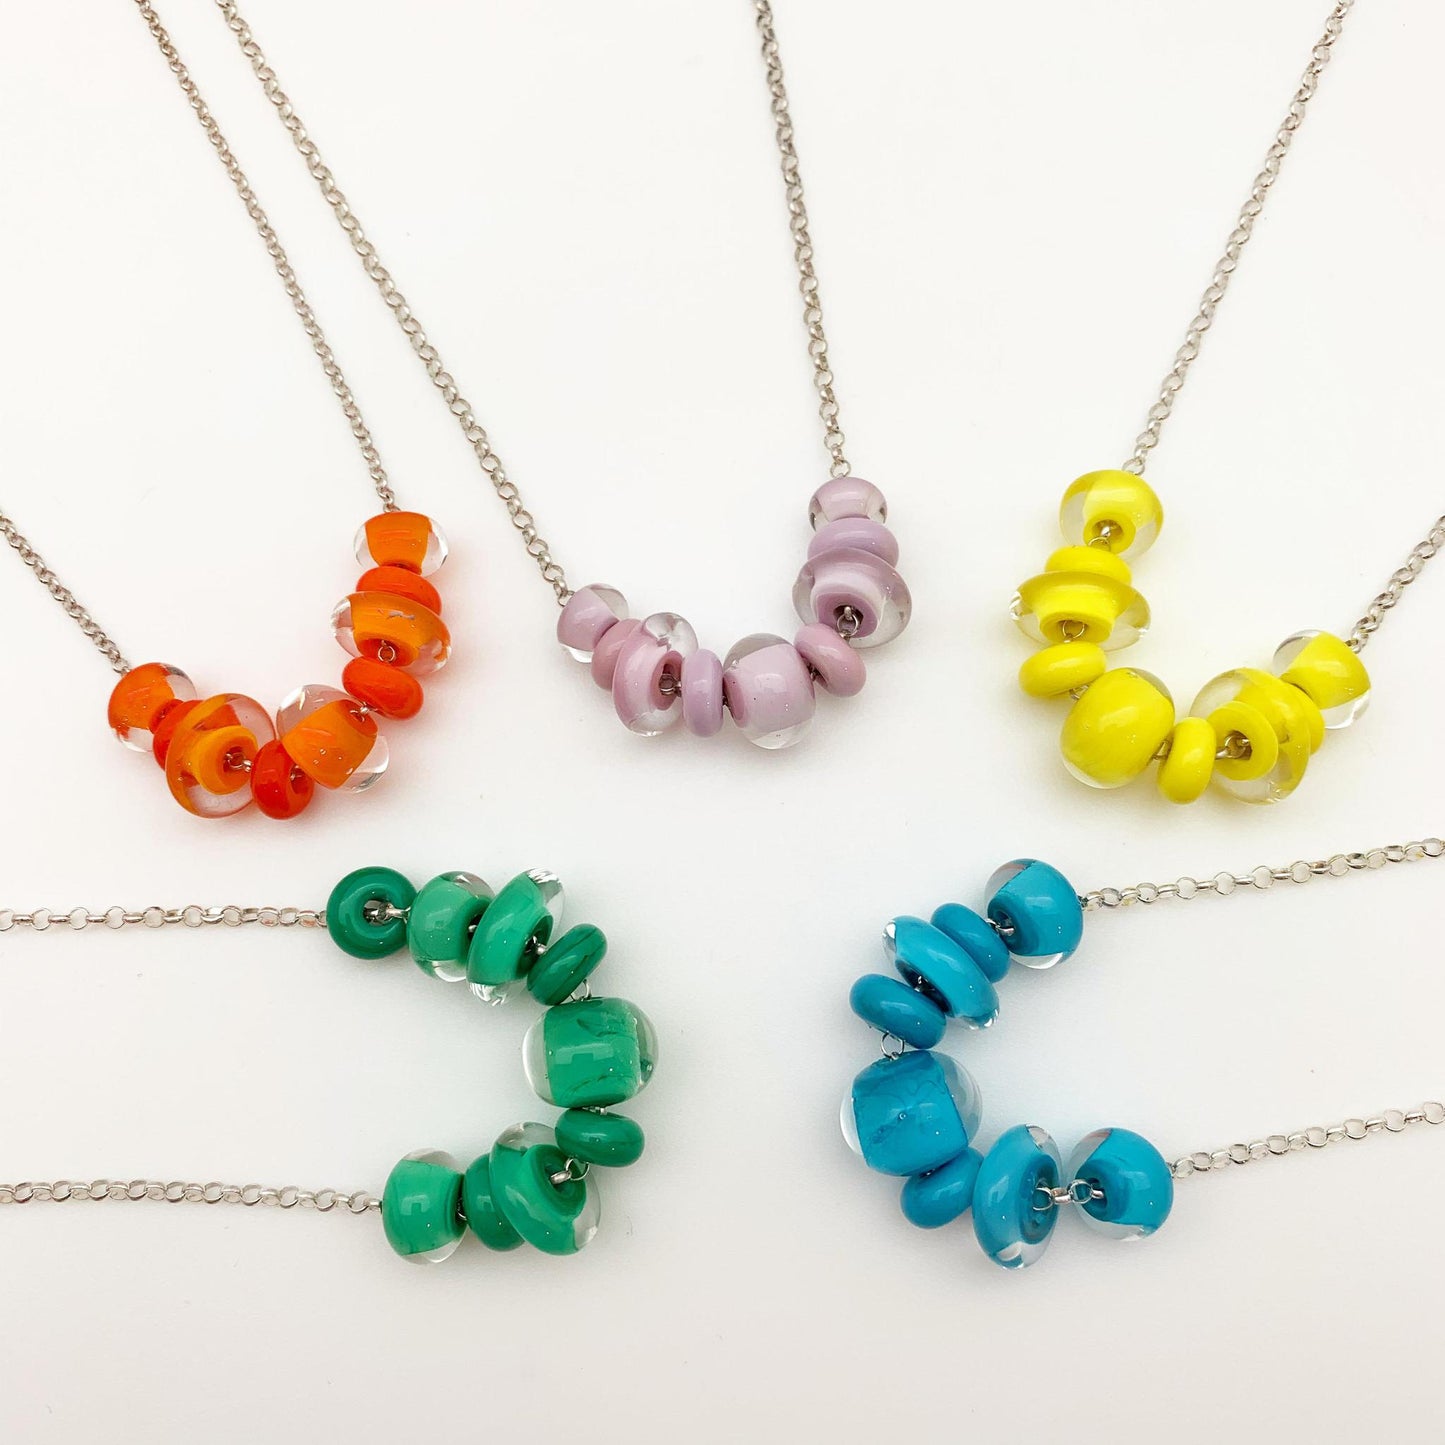 Necklace - Glass "Lifesaver" Beads - Cobalt Blue